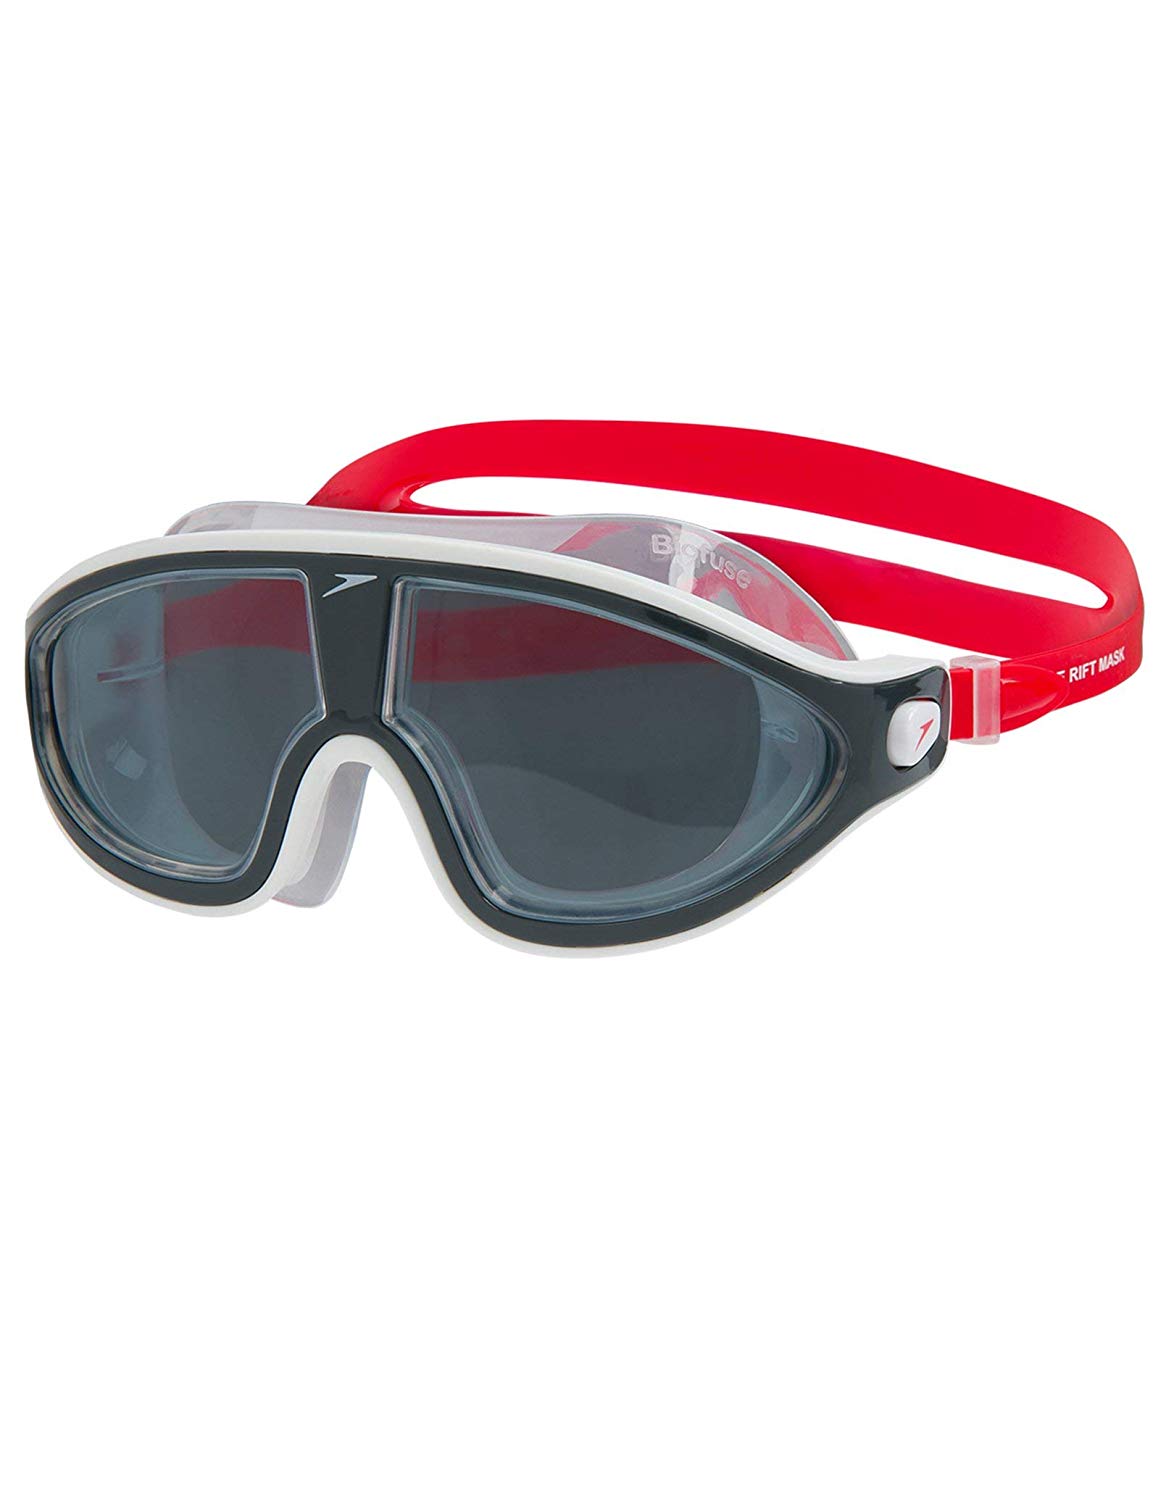 Speedo Rift Mask V2 Goggle (Red/Smoke) - Best Price online Prokicksports.com